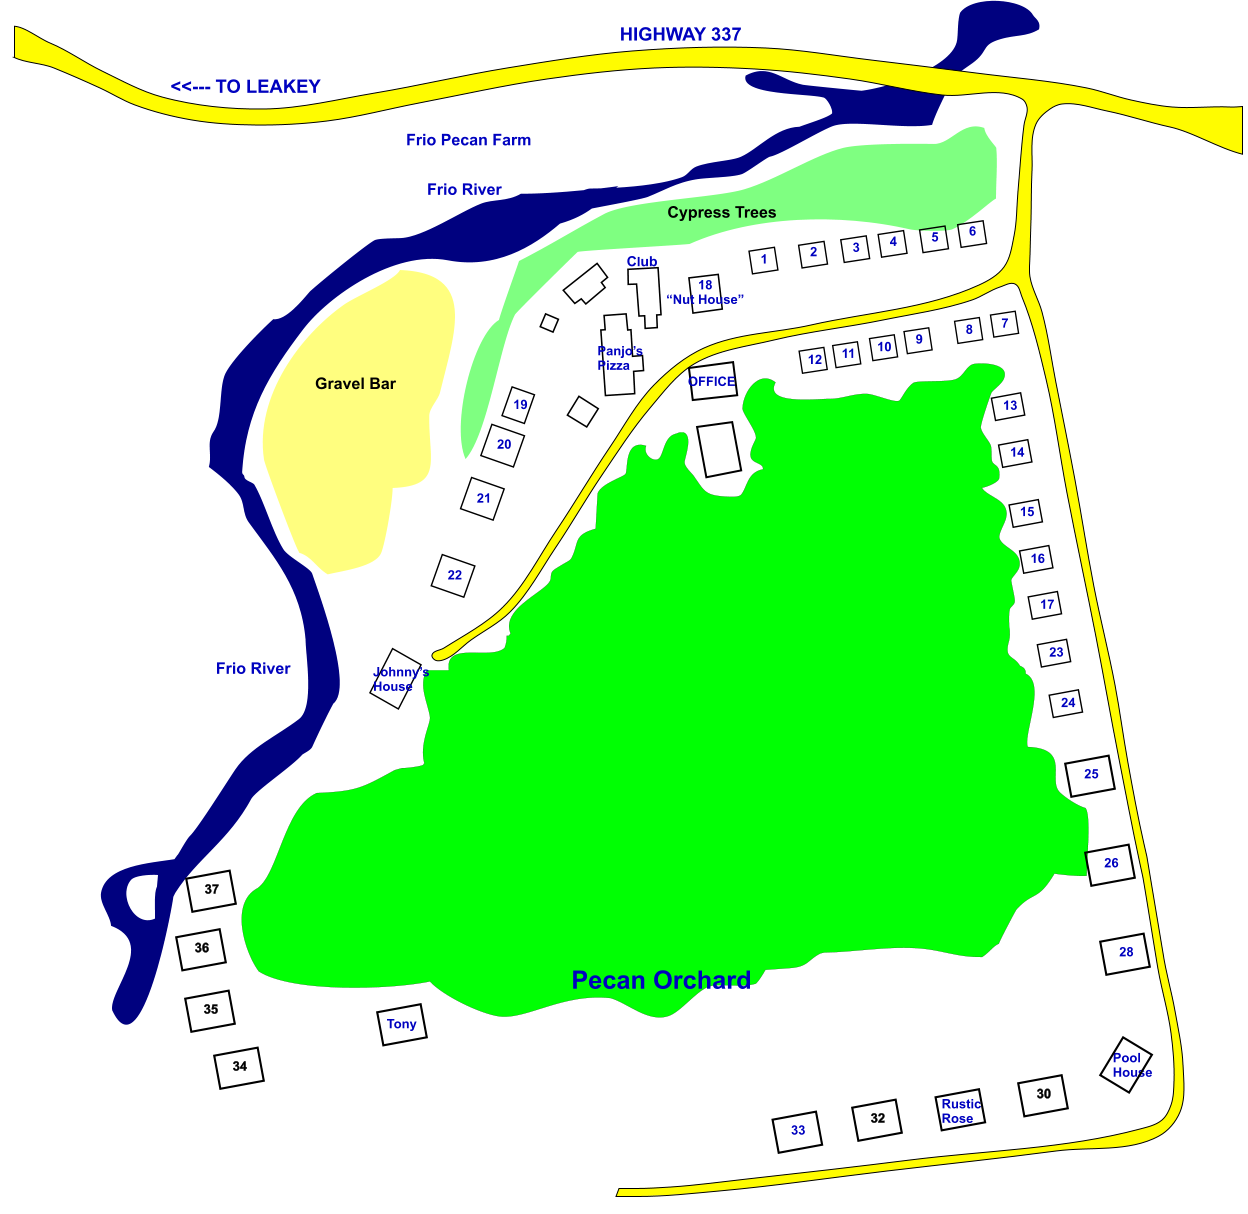 Frio Pecan Farm Map